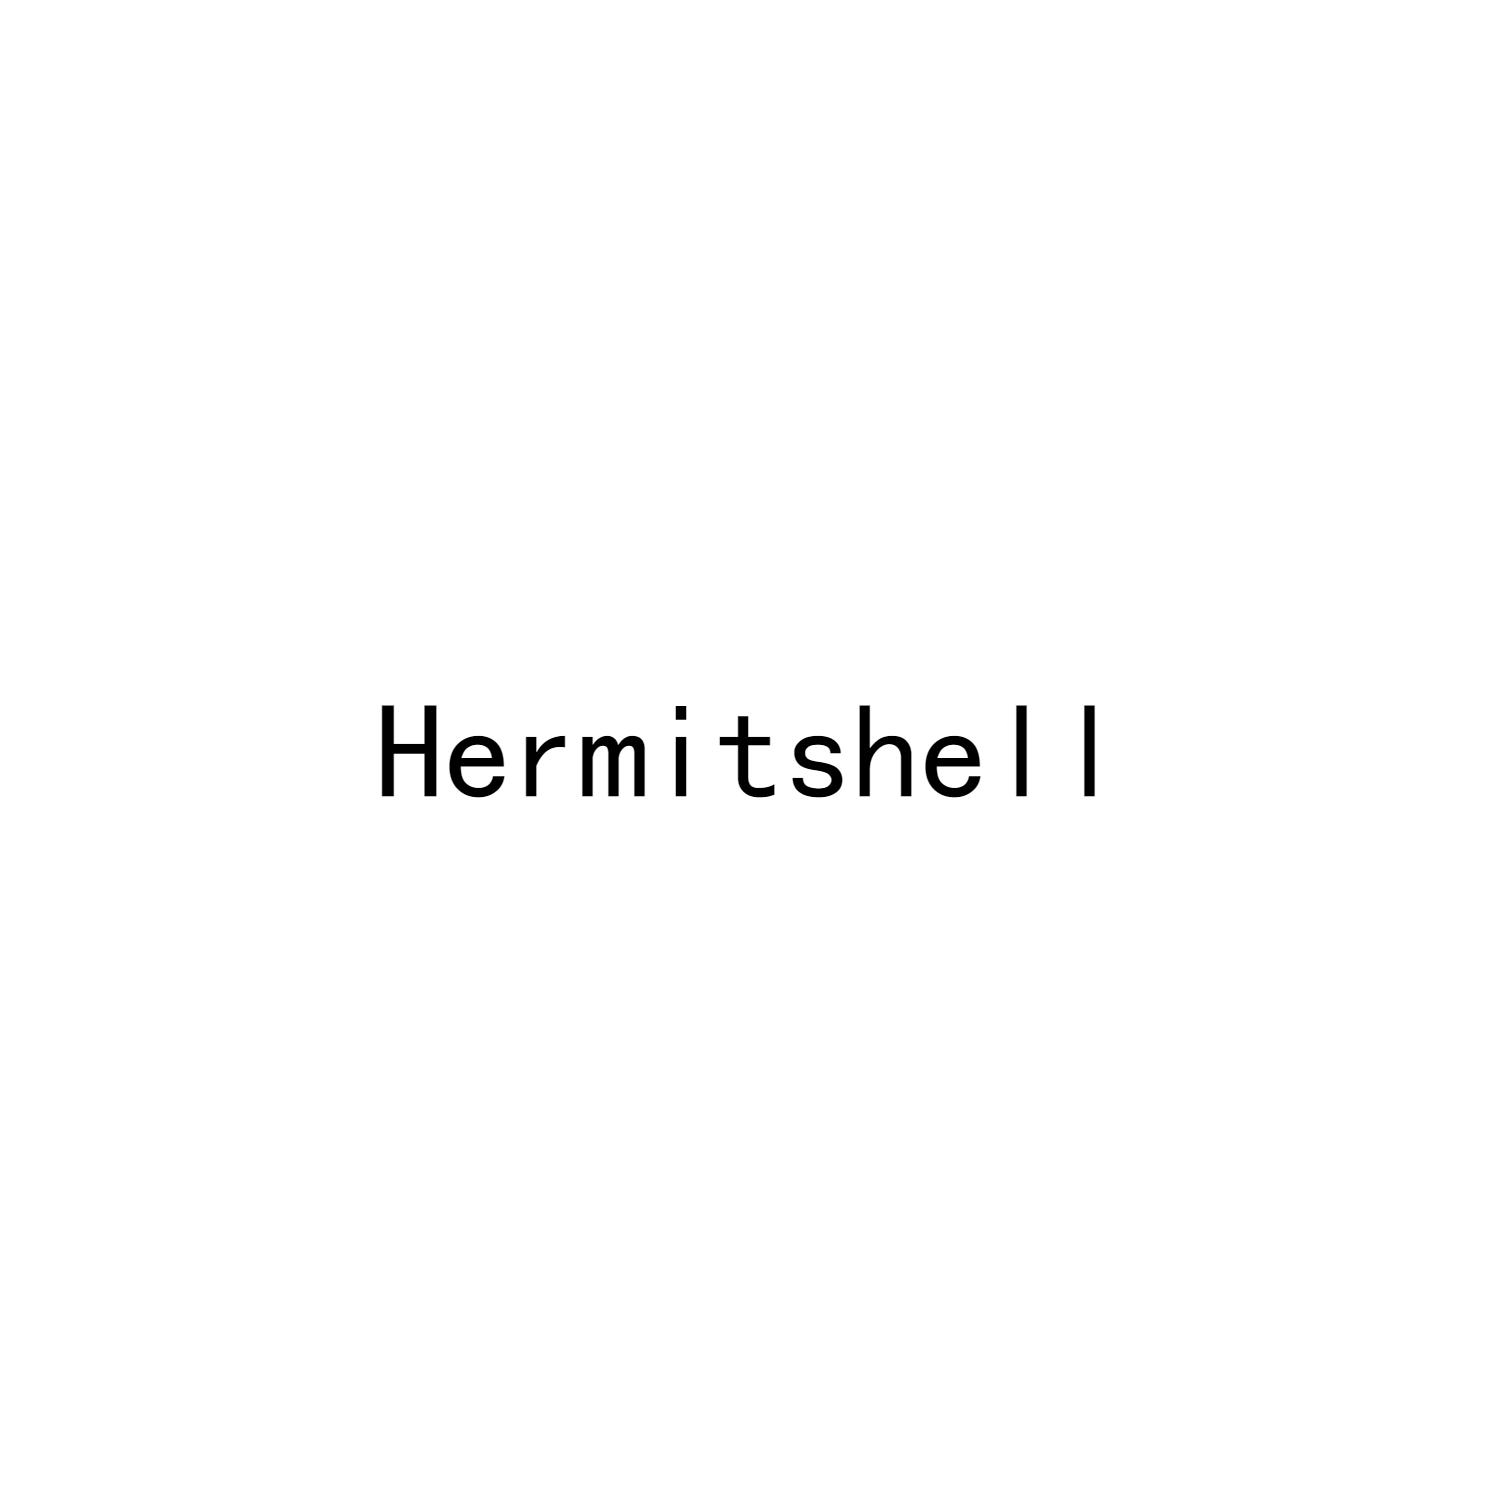 HERMITSHELL